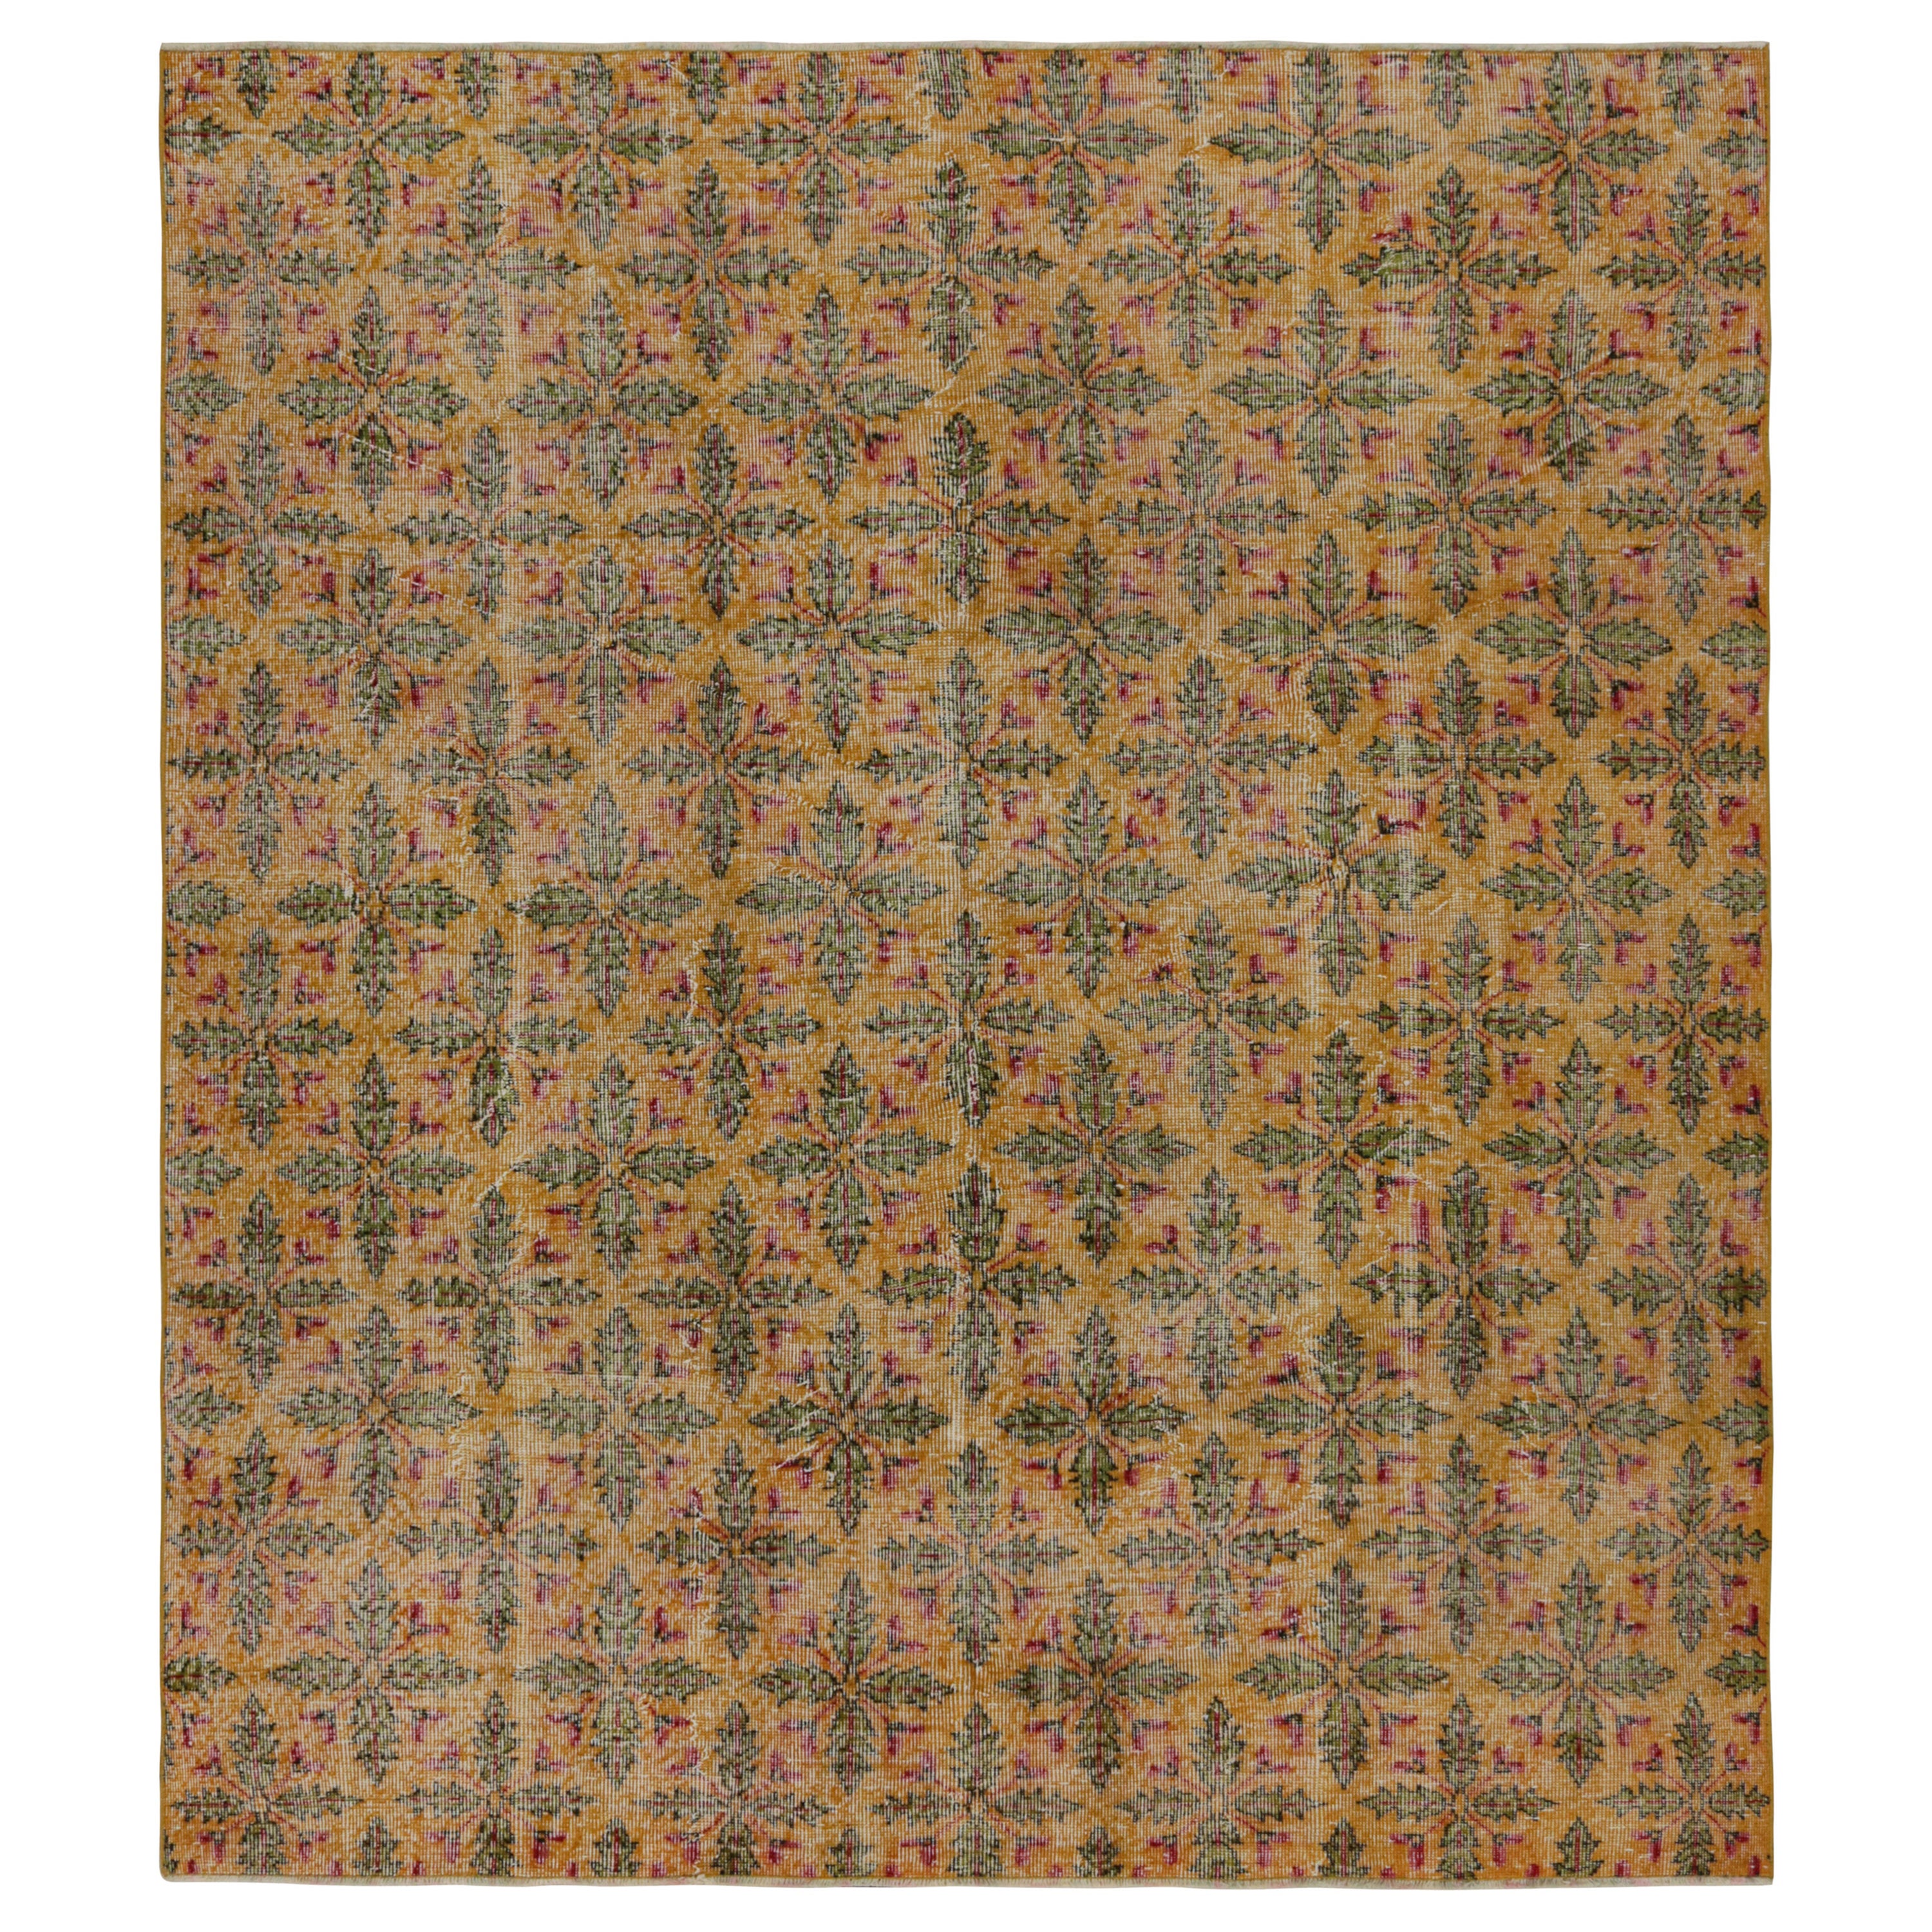 Vintage Zeki Müren Rug, with Geometric Patterns, from Rug & Kilim For Sale